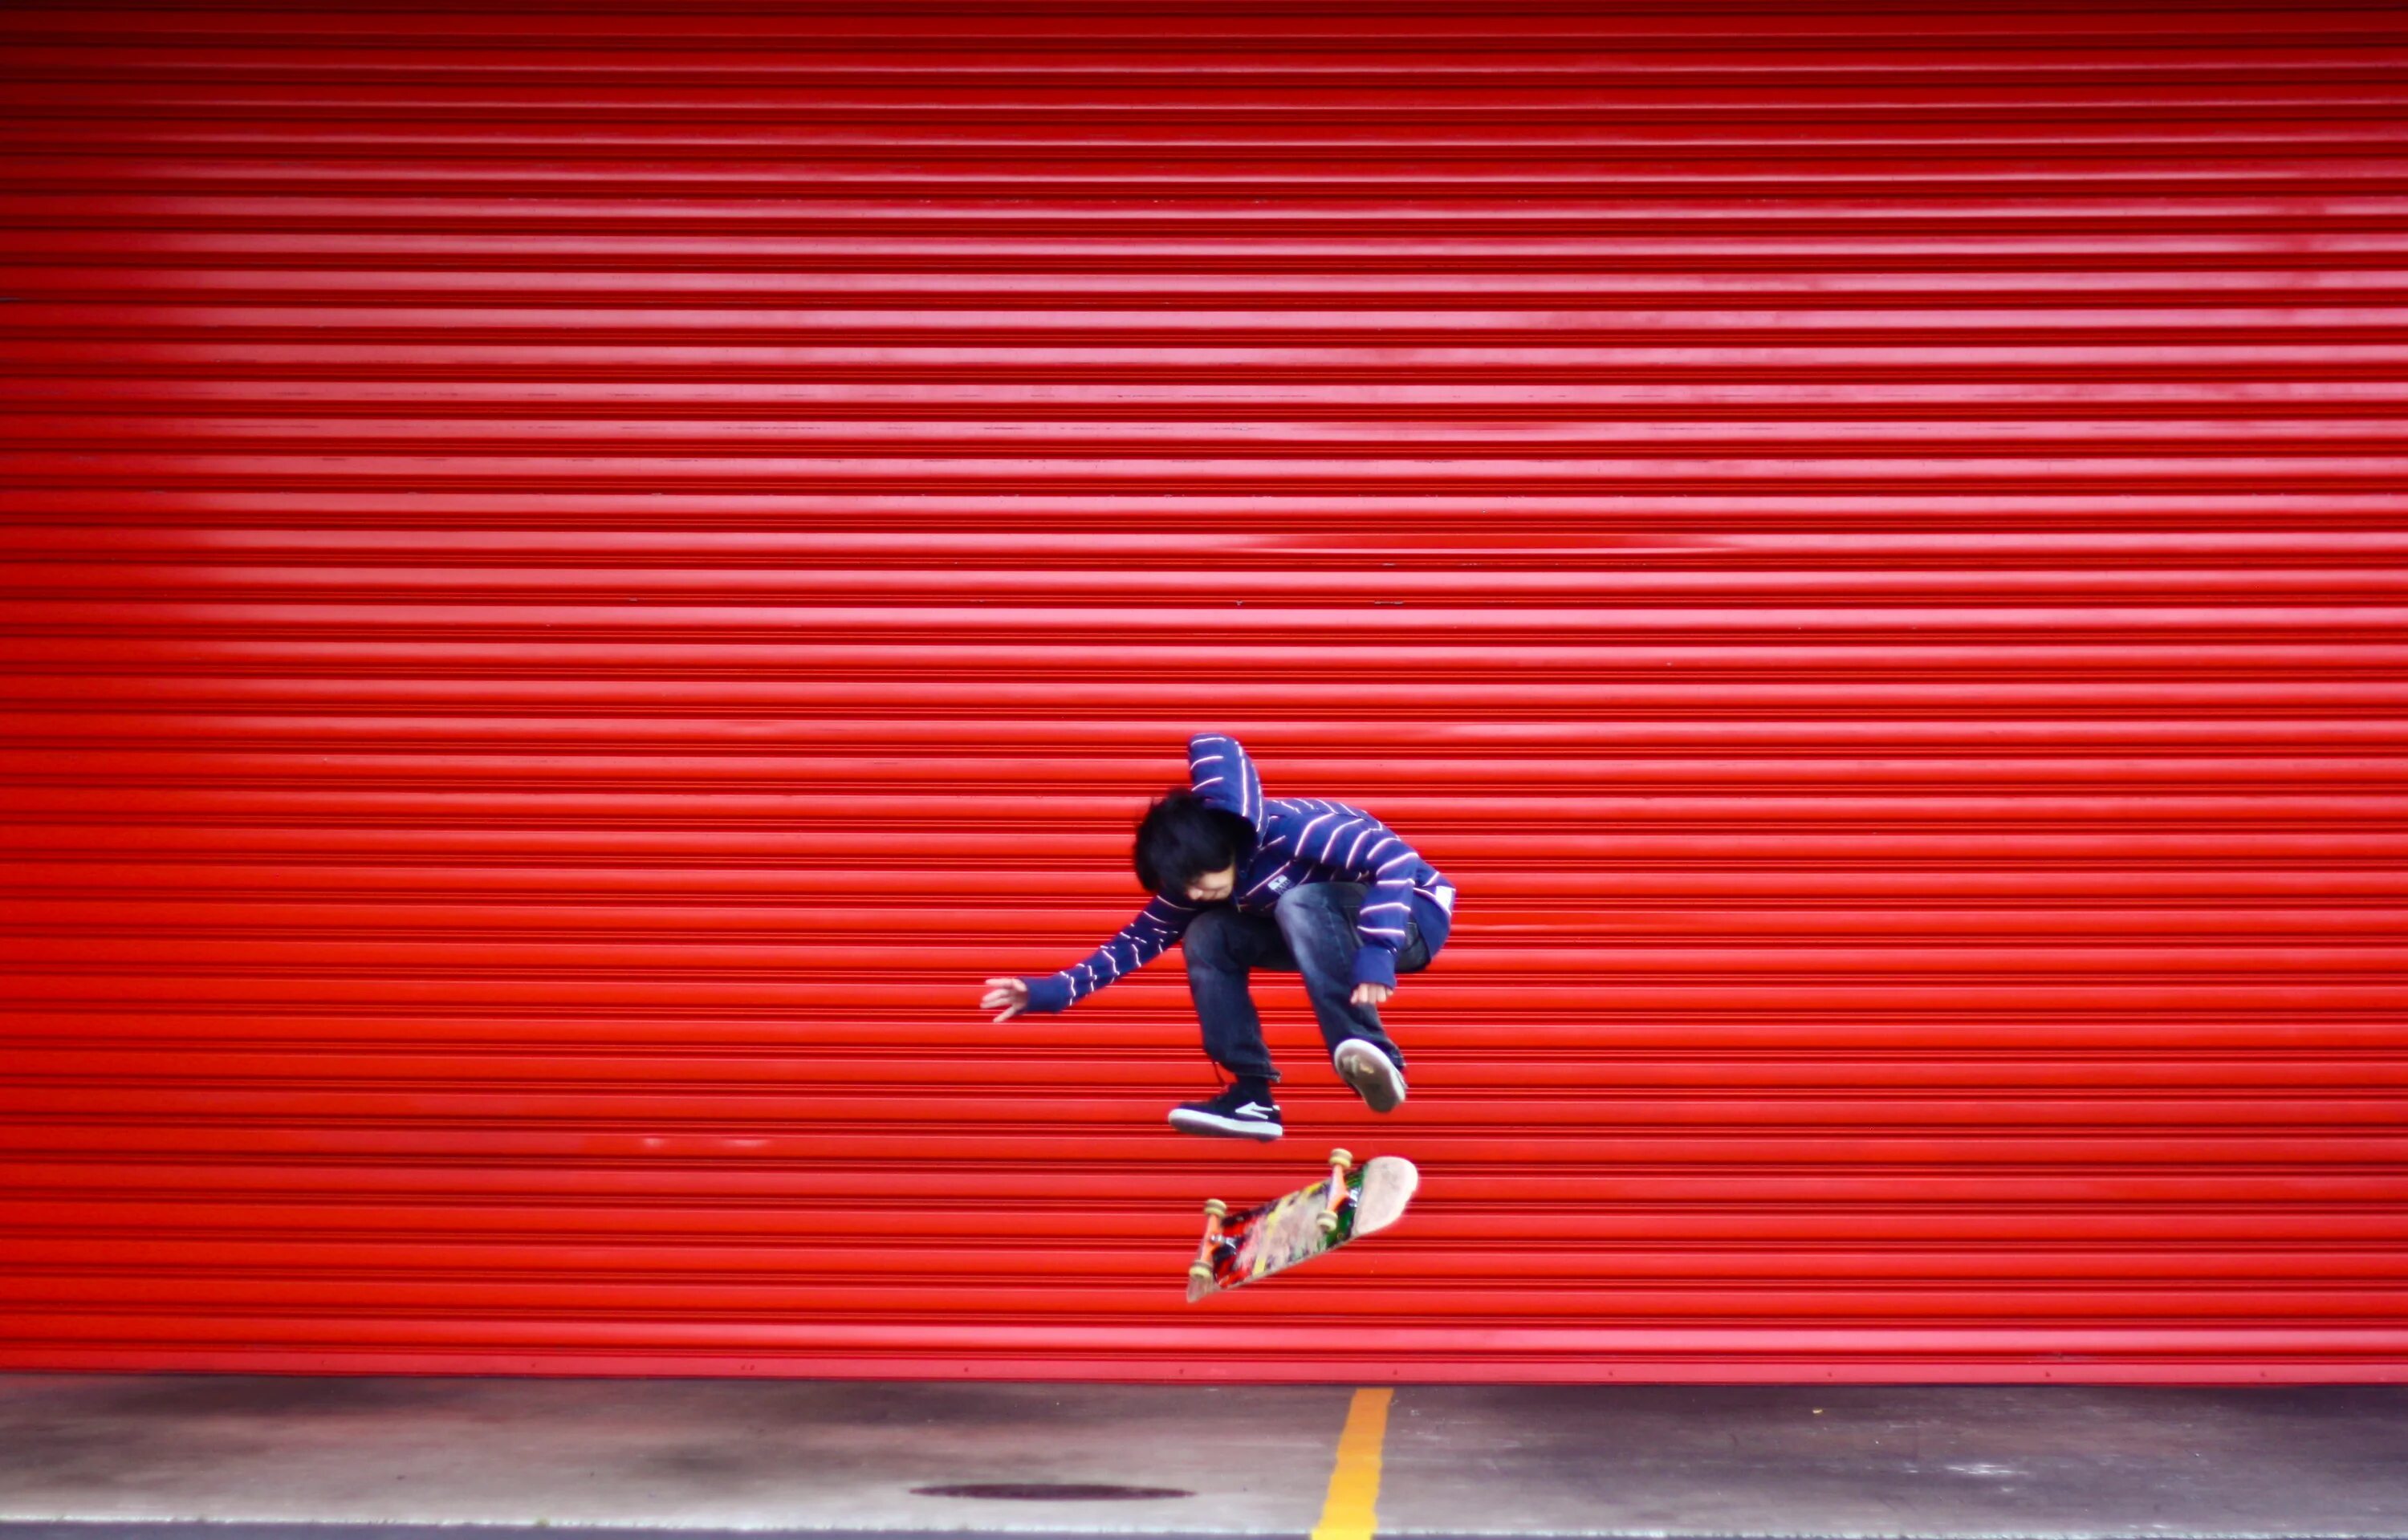 Скейтеры. Скейтер на Красном фоне. Скейт обои. Скейтбординг. Игры красная стена